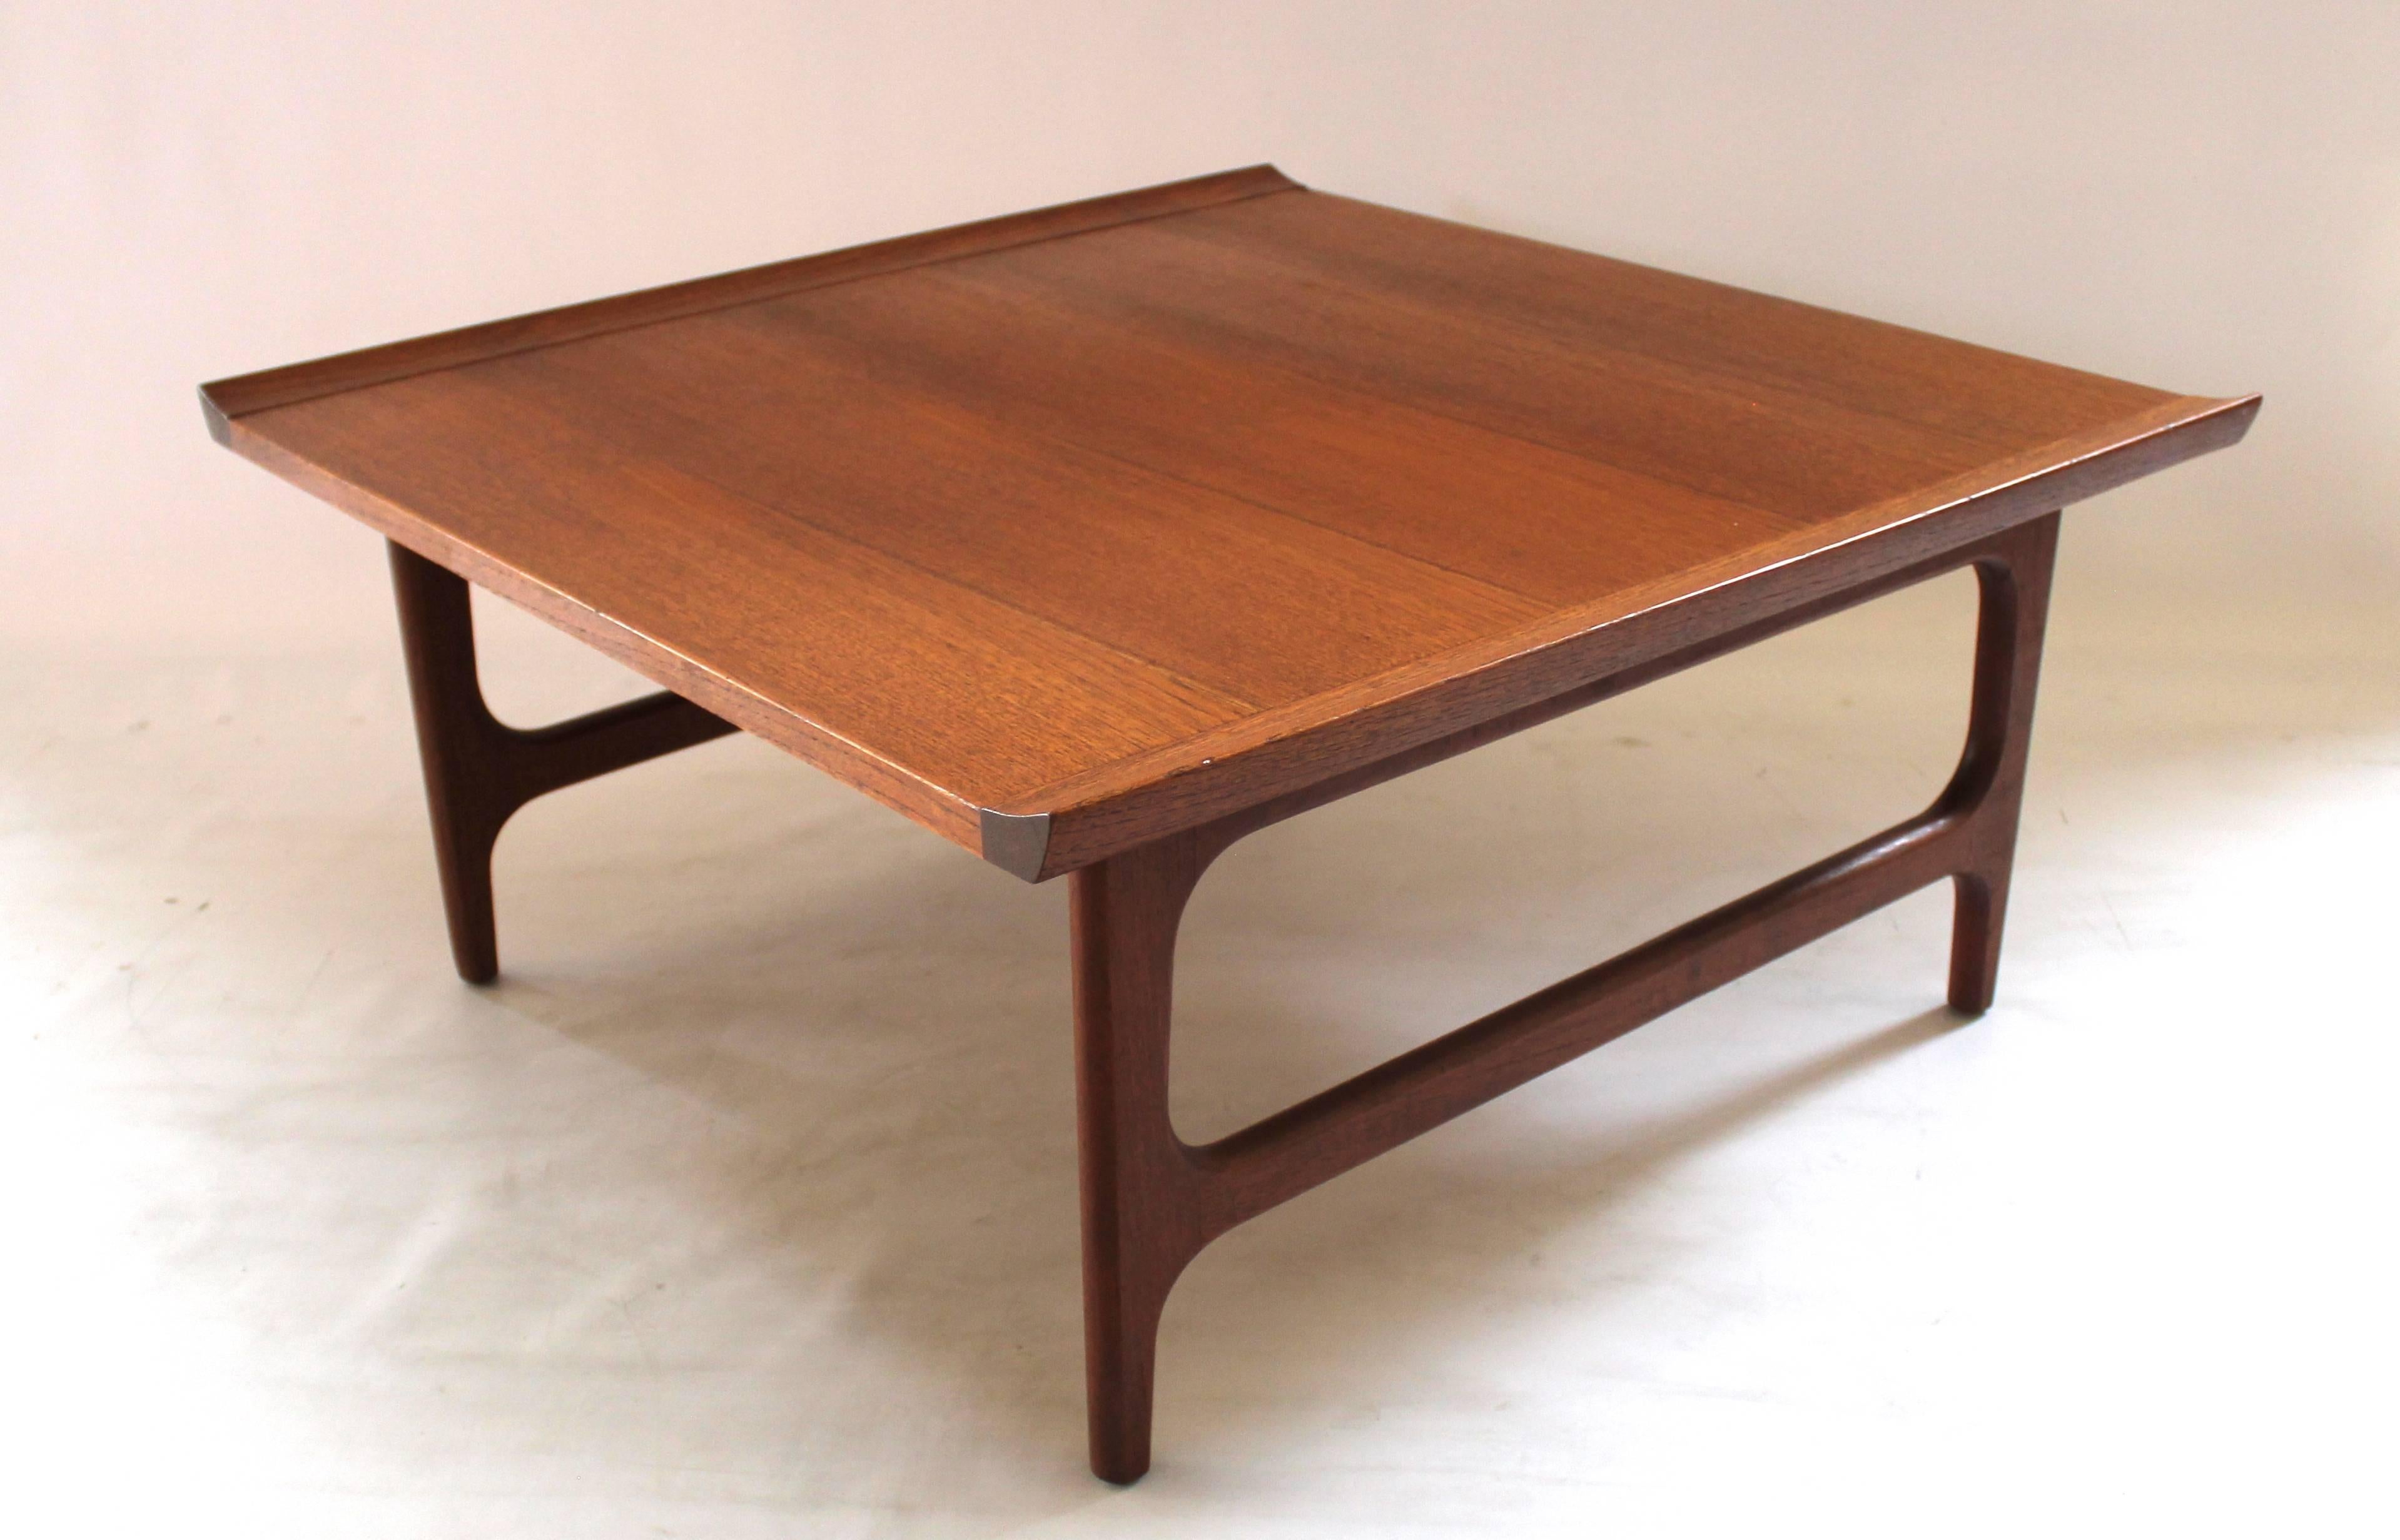 1960s Japanese Modern teak coffee table in the style of Finn Juhl. Marked "Made in Japan."